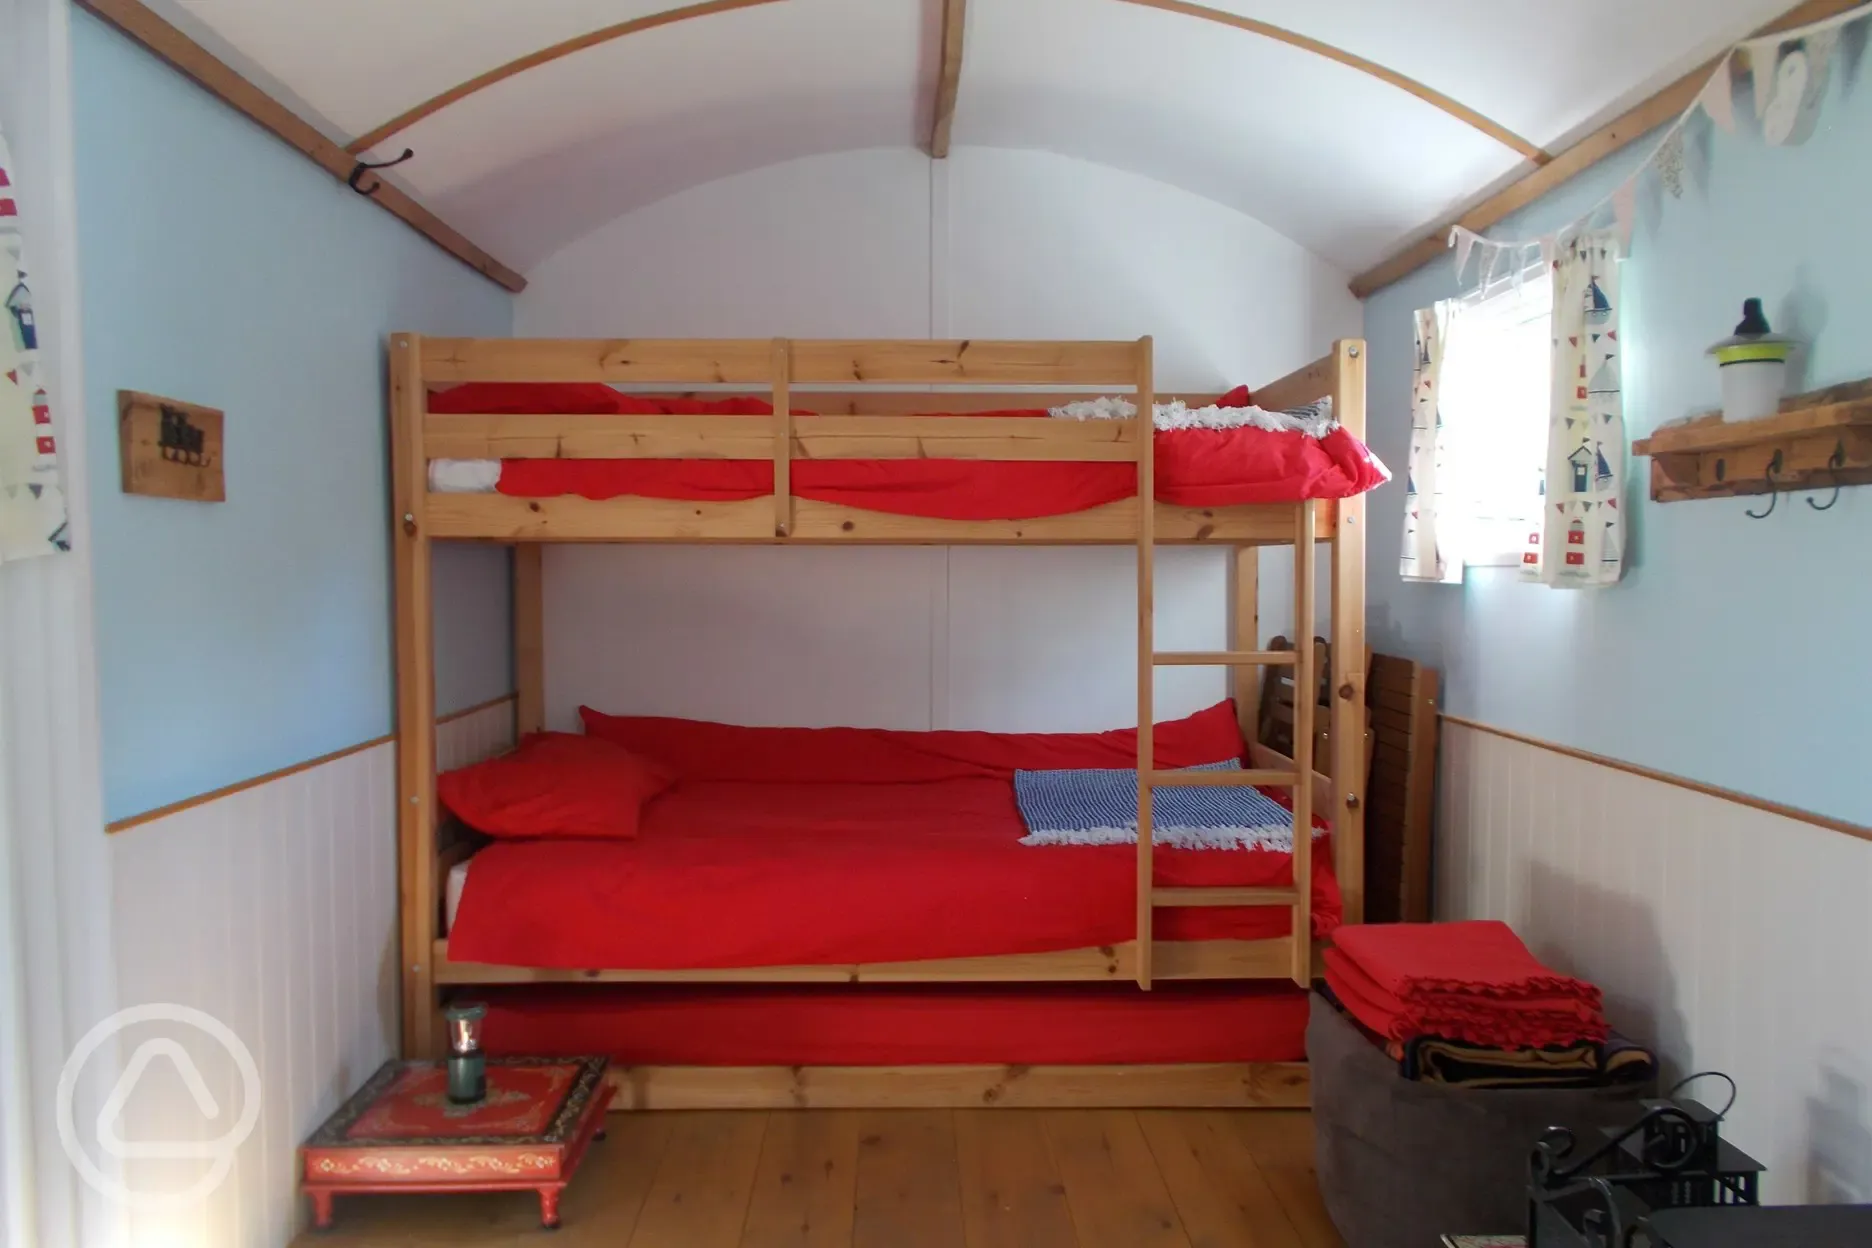 Shepherds hut interior - bunkbeds